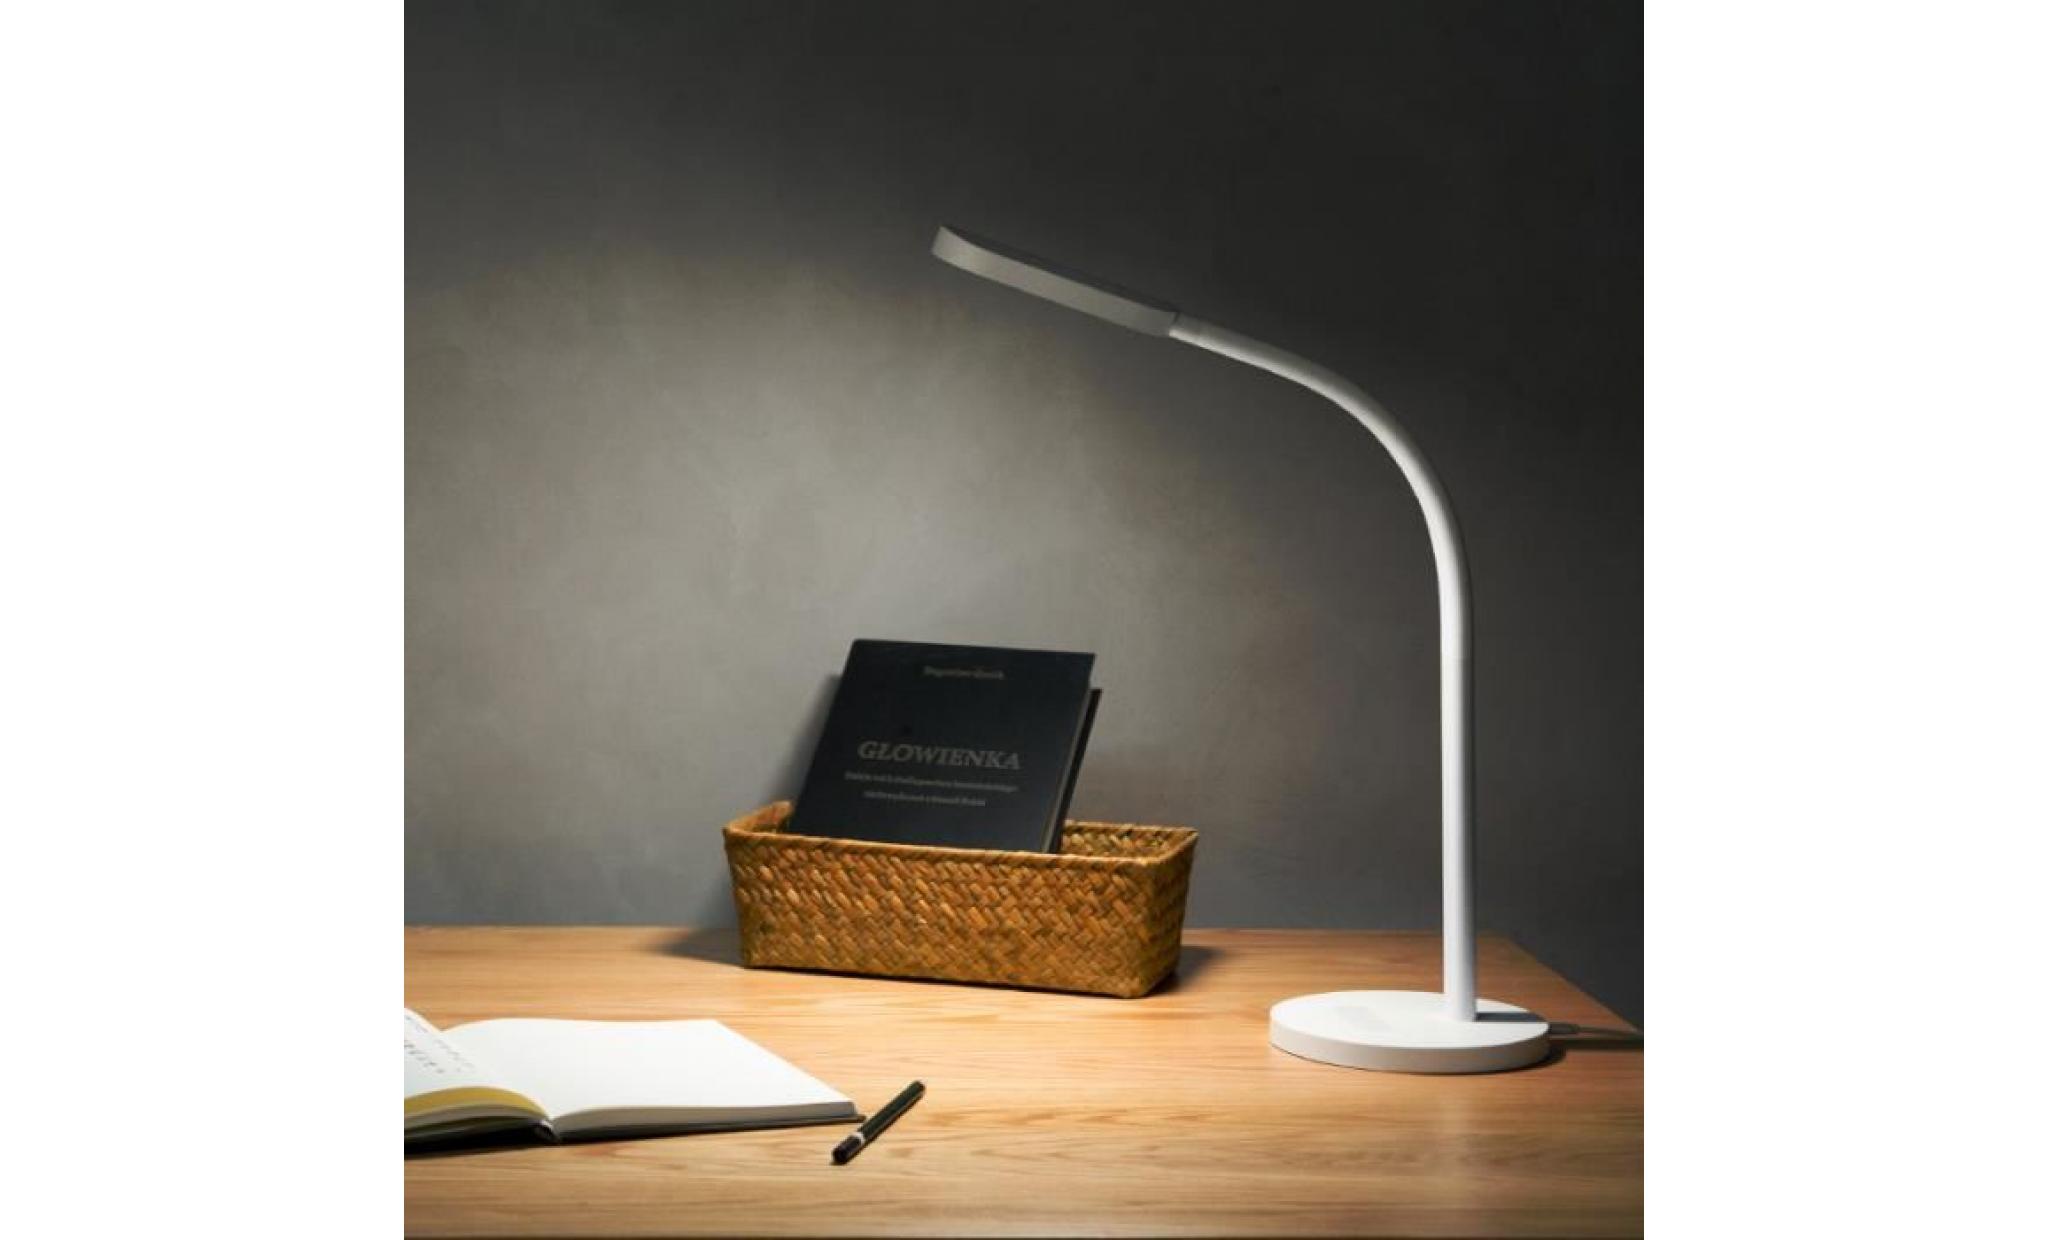 xiaomi yeelight portable lampe de table à led protection oculaire flexible protection micro usb charge 5 modes réglable blanc pas cher